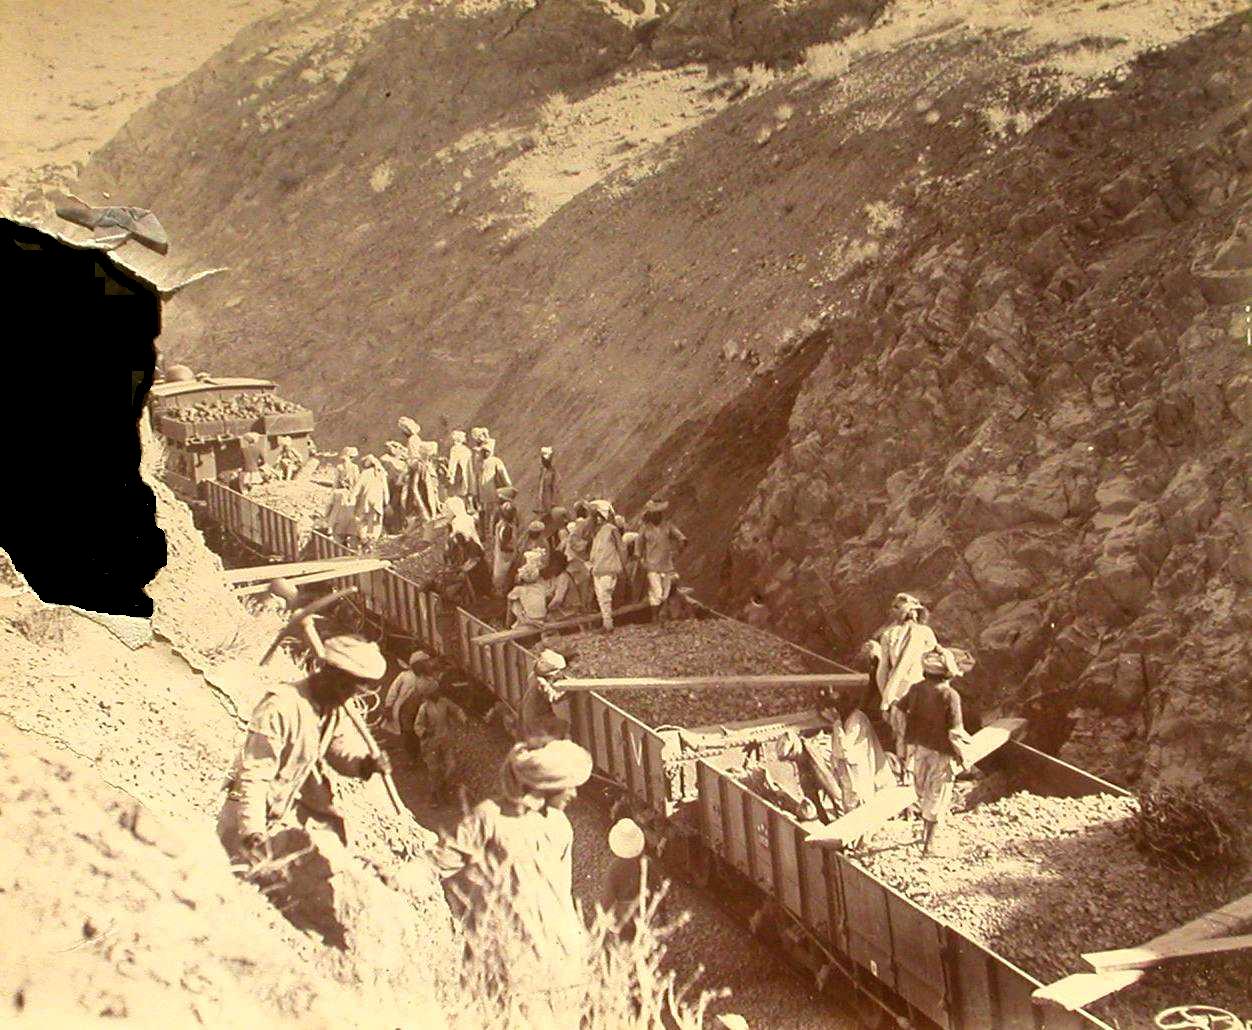 Maintenance train on the Bolan Pass line. William Edge, 1890.